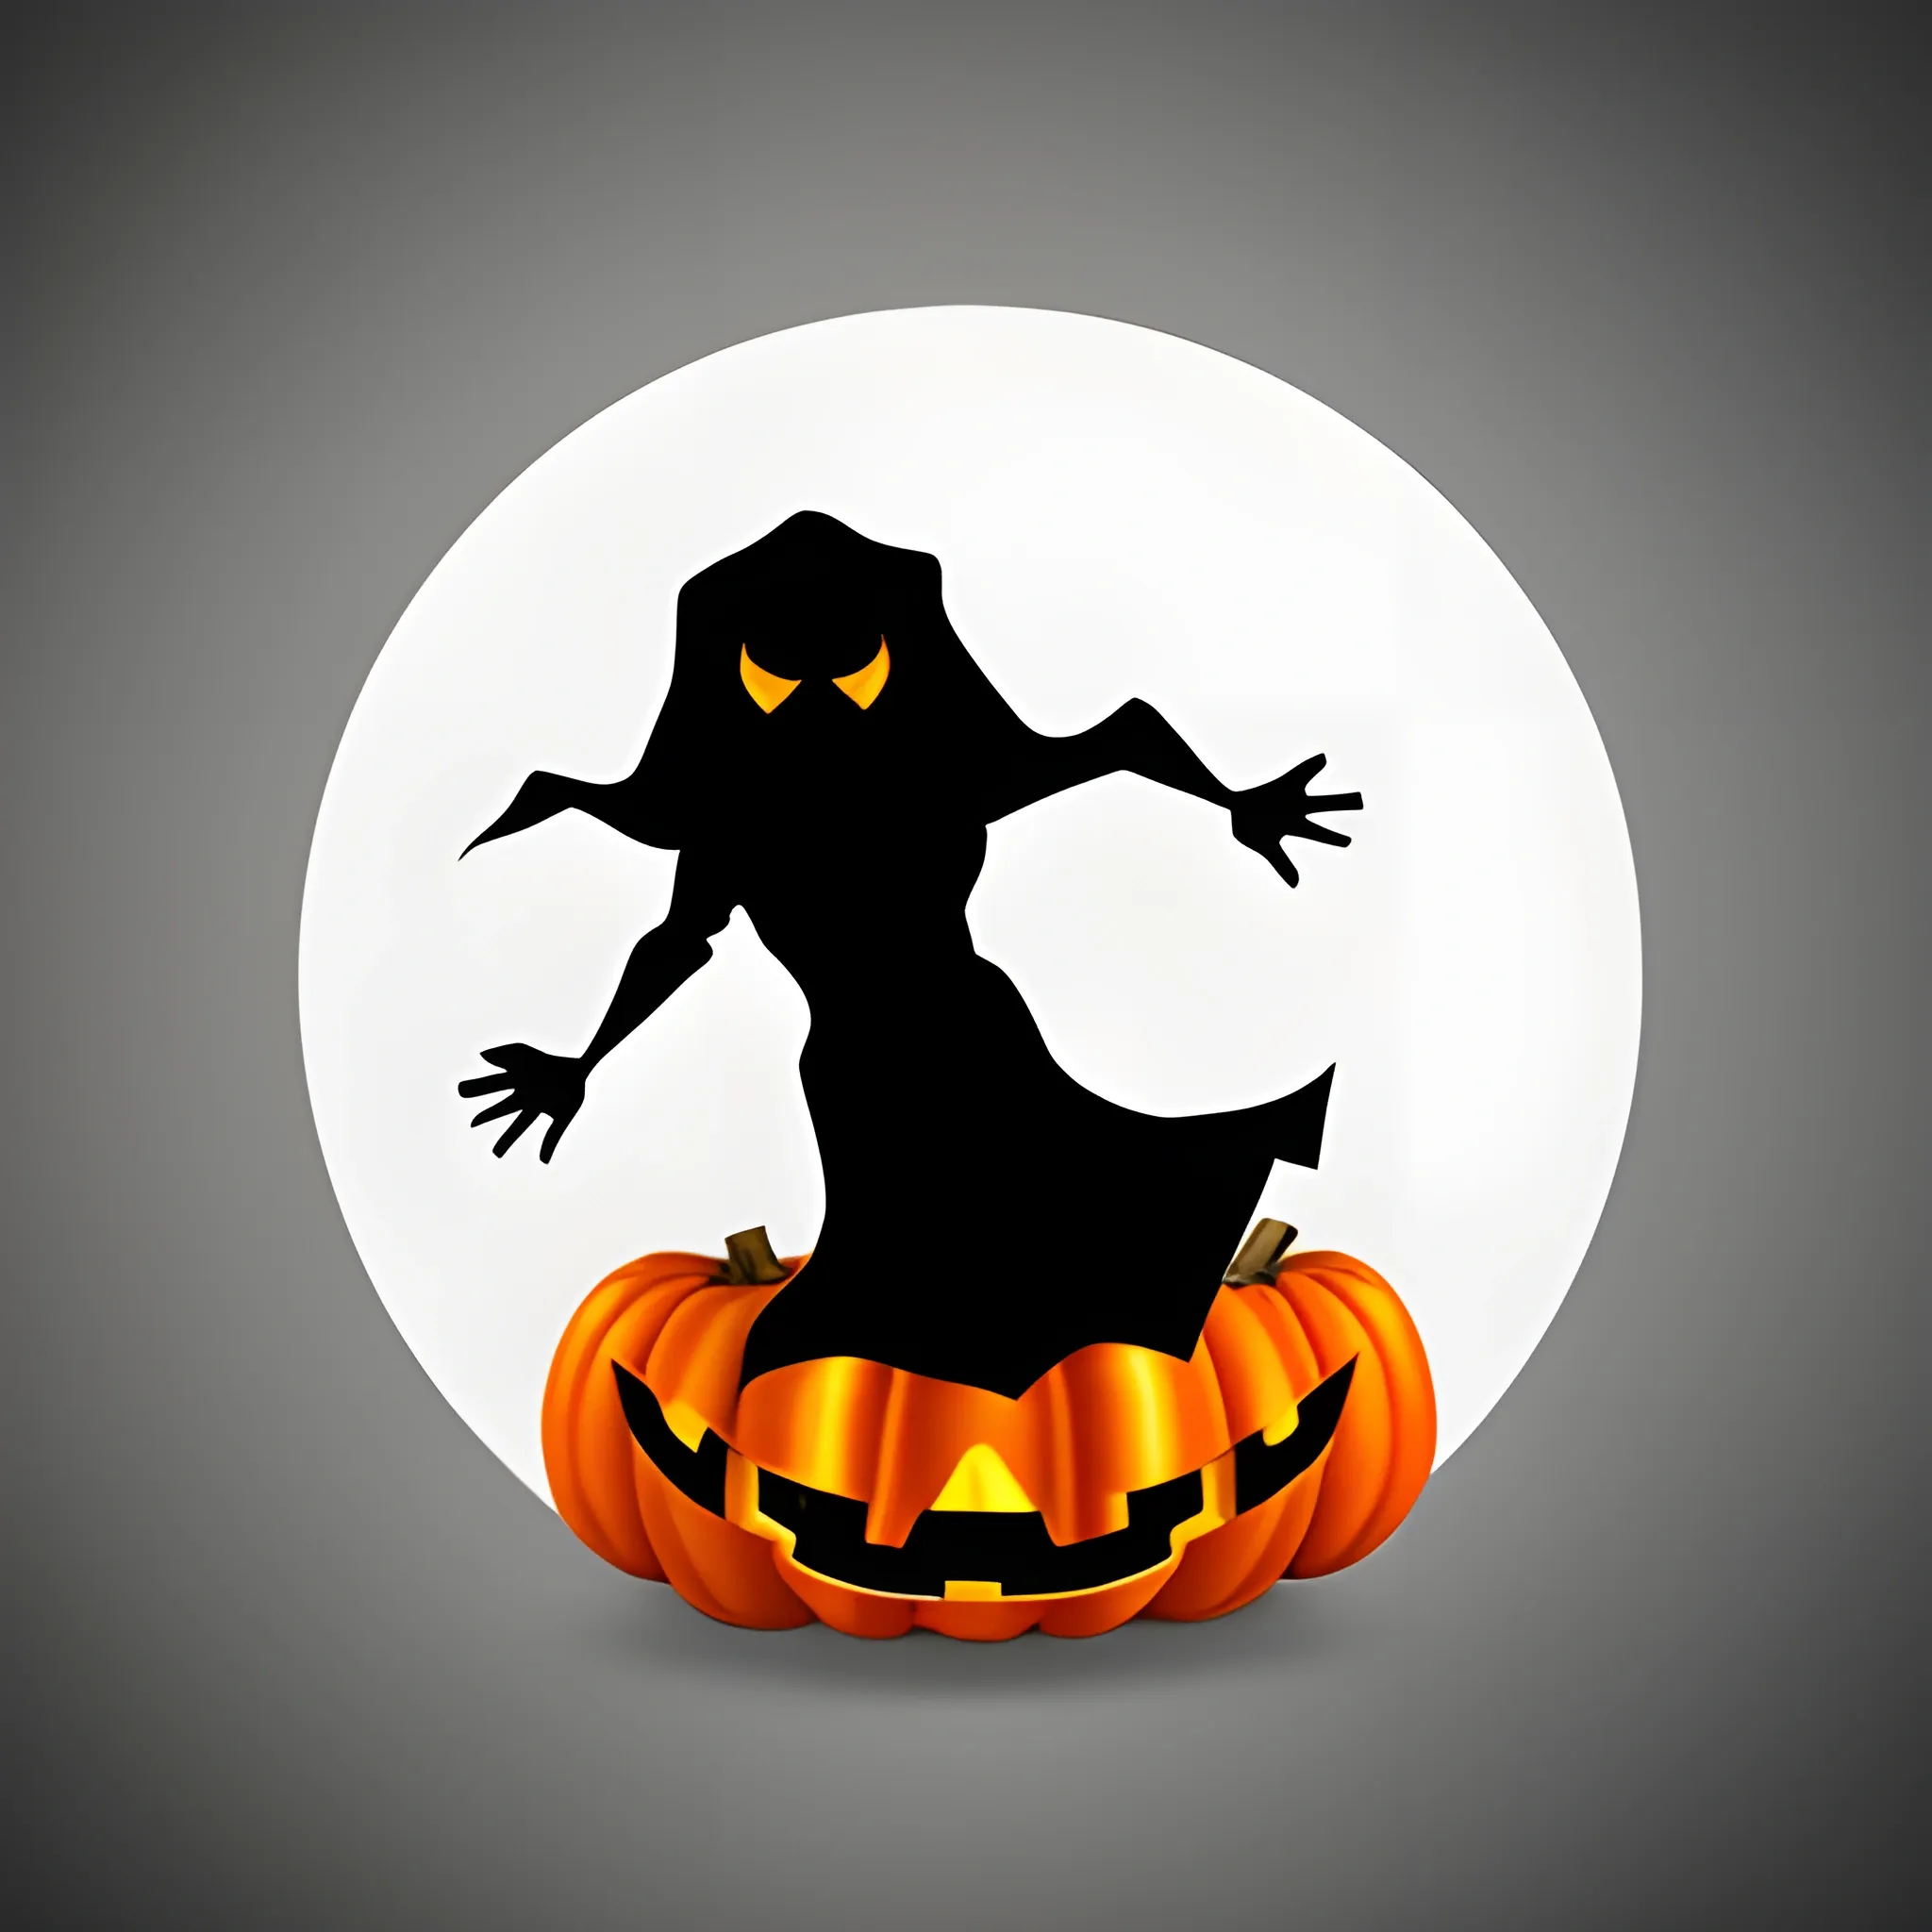 Halloween logo, Ghost, no text